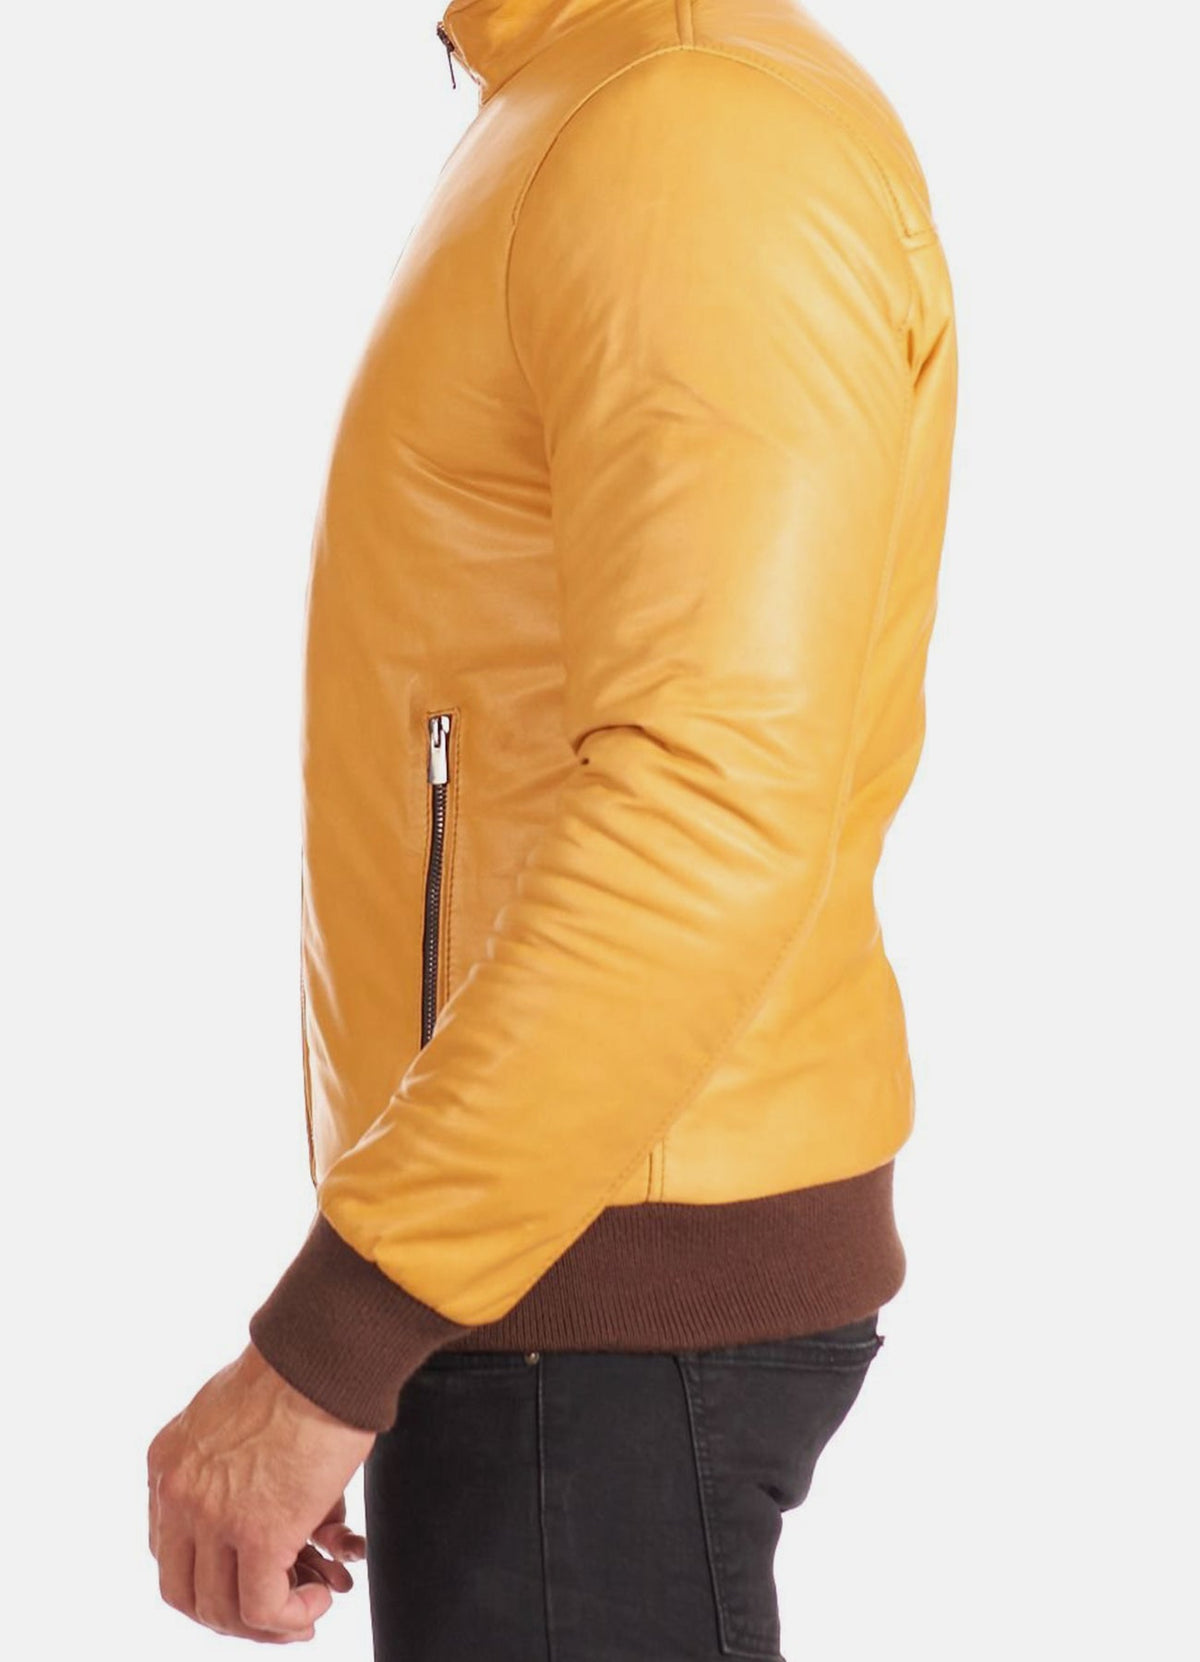 Mens Soft Yellow Bomber Leather Jacket